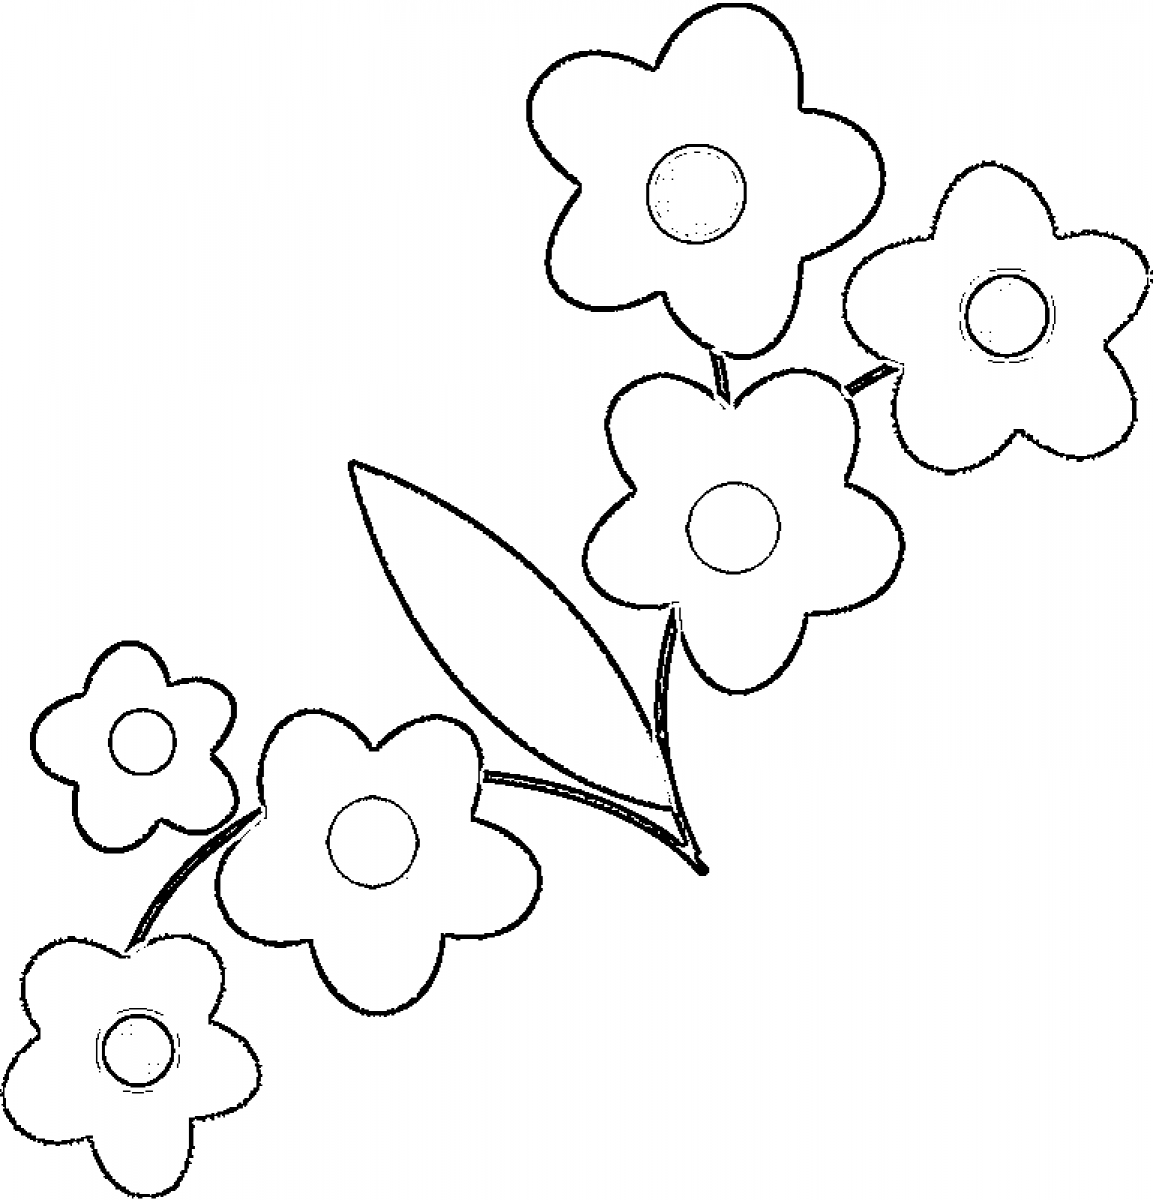 Printable outline flower clip art outlinebw Coloring Page for kids.